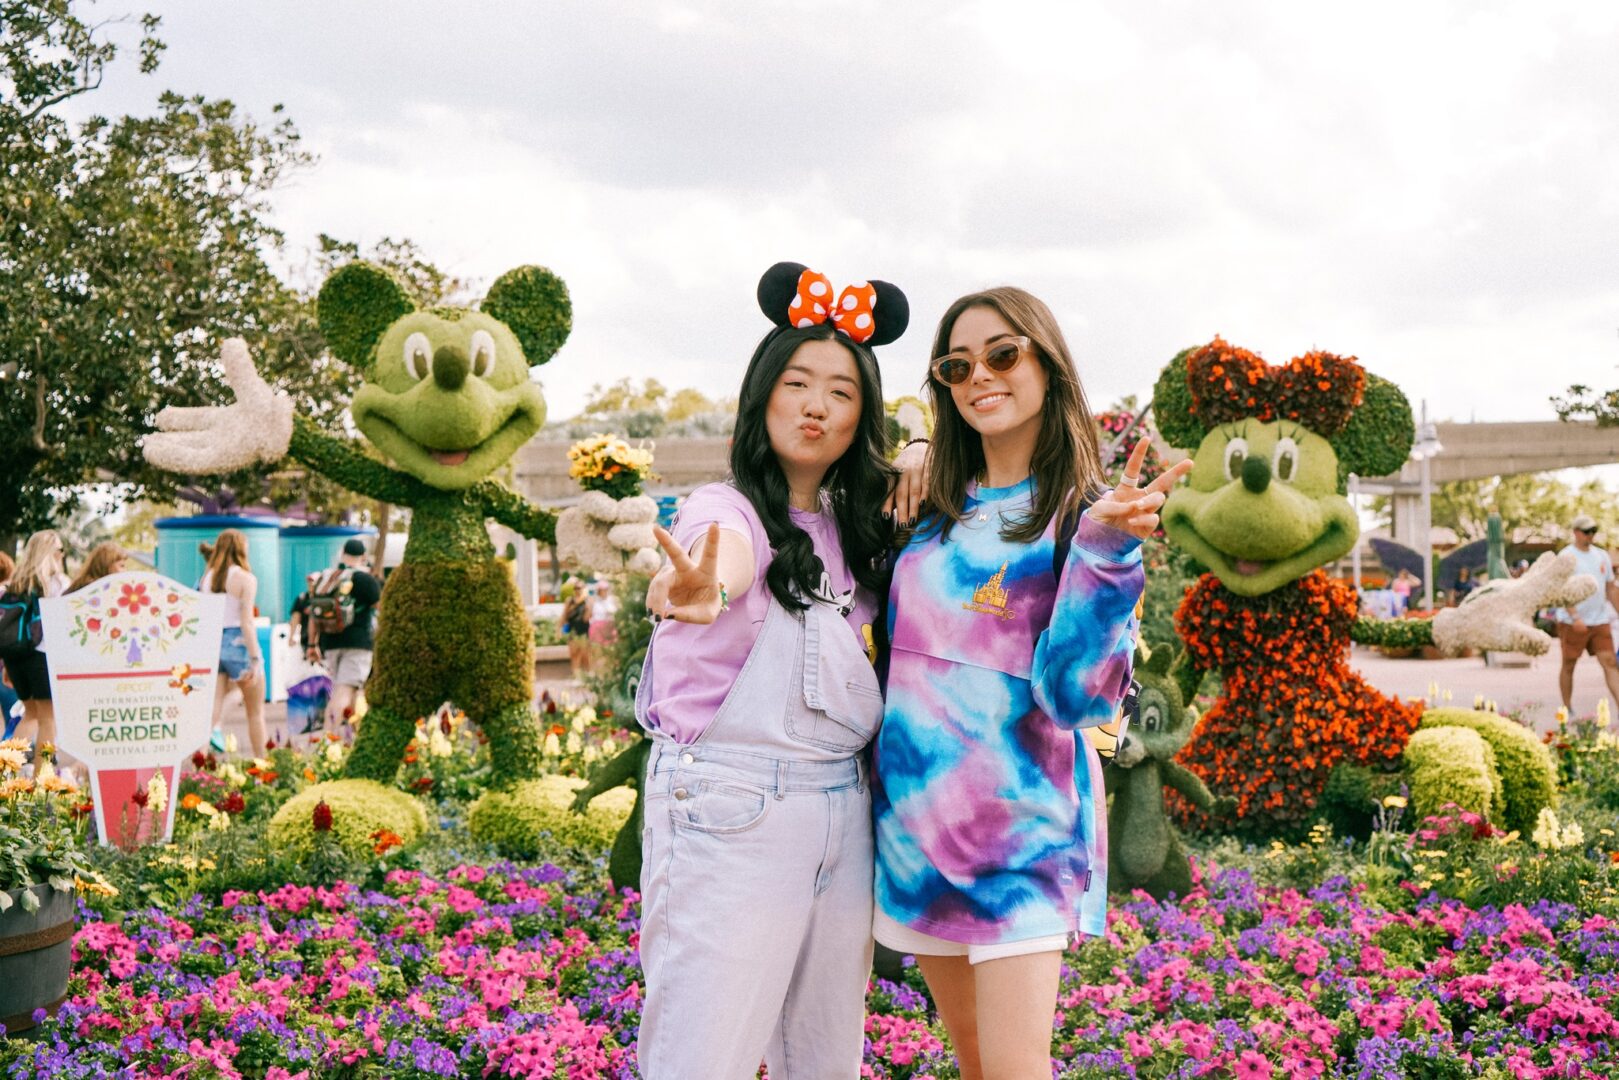 Freeform Stars Mariel Molino and Sherry Cola take on thrills at Walt Disney World